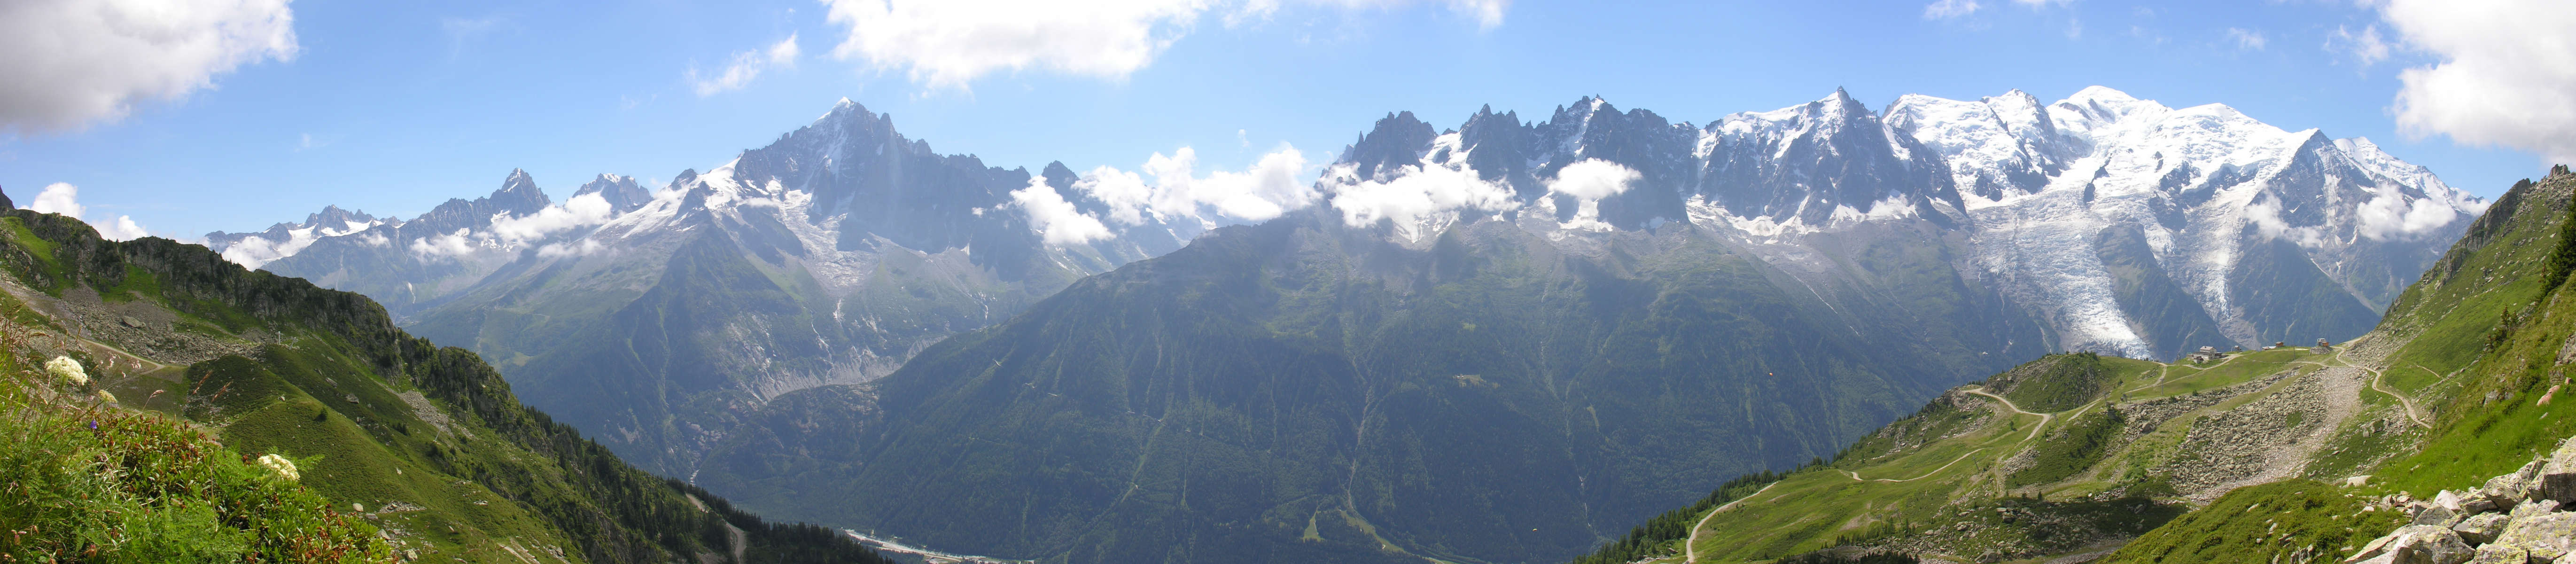 Mont Blanc - France2.jpg